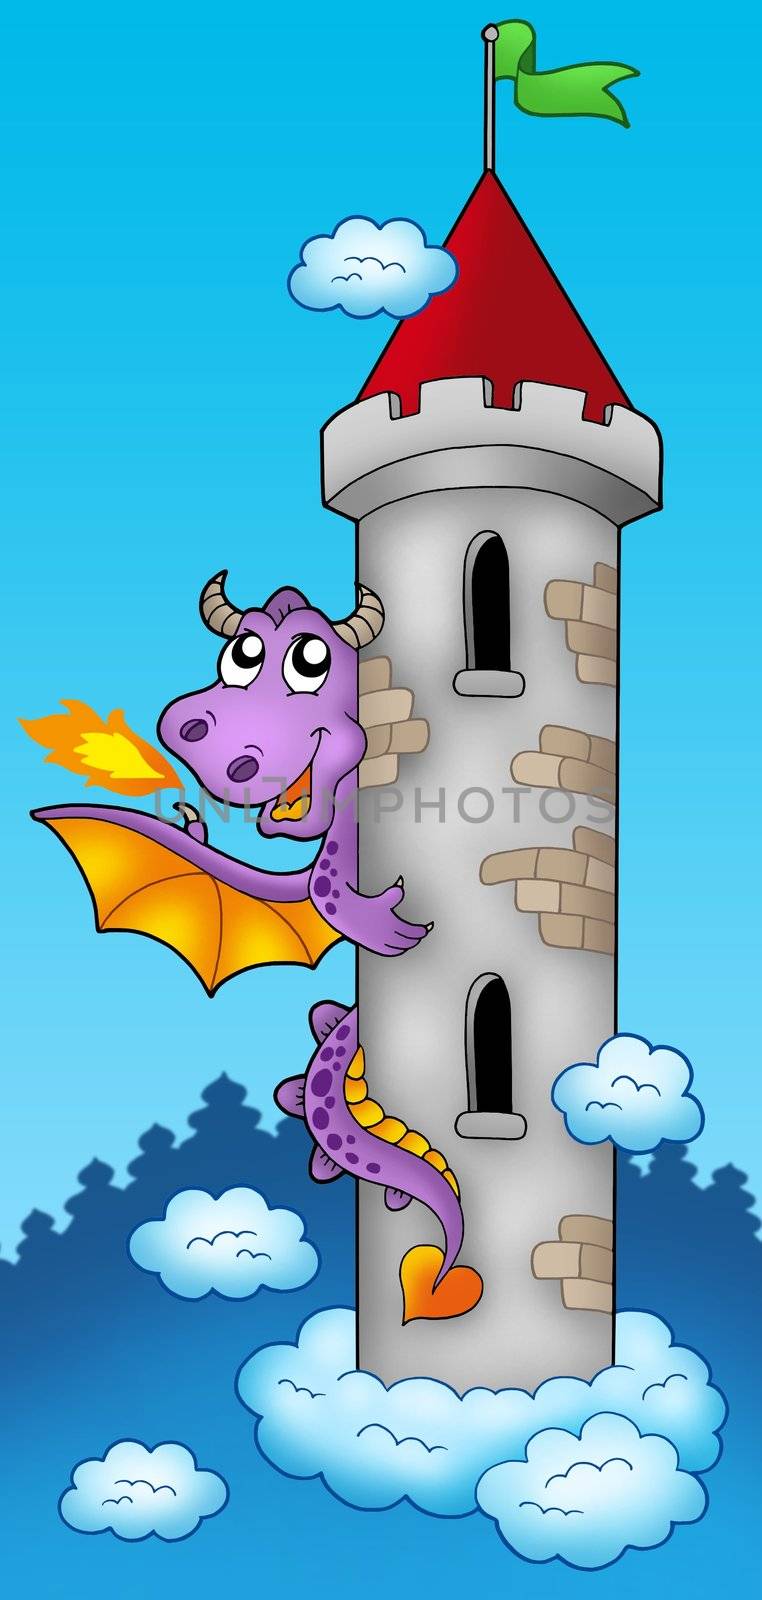 Purple dragon on castle tower - color illustration.